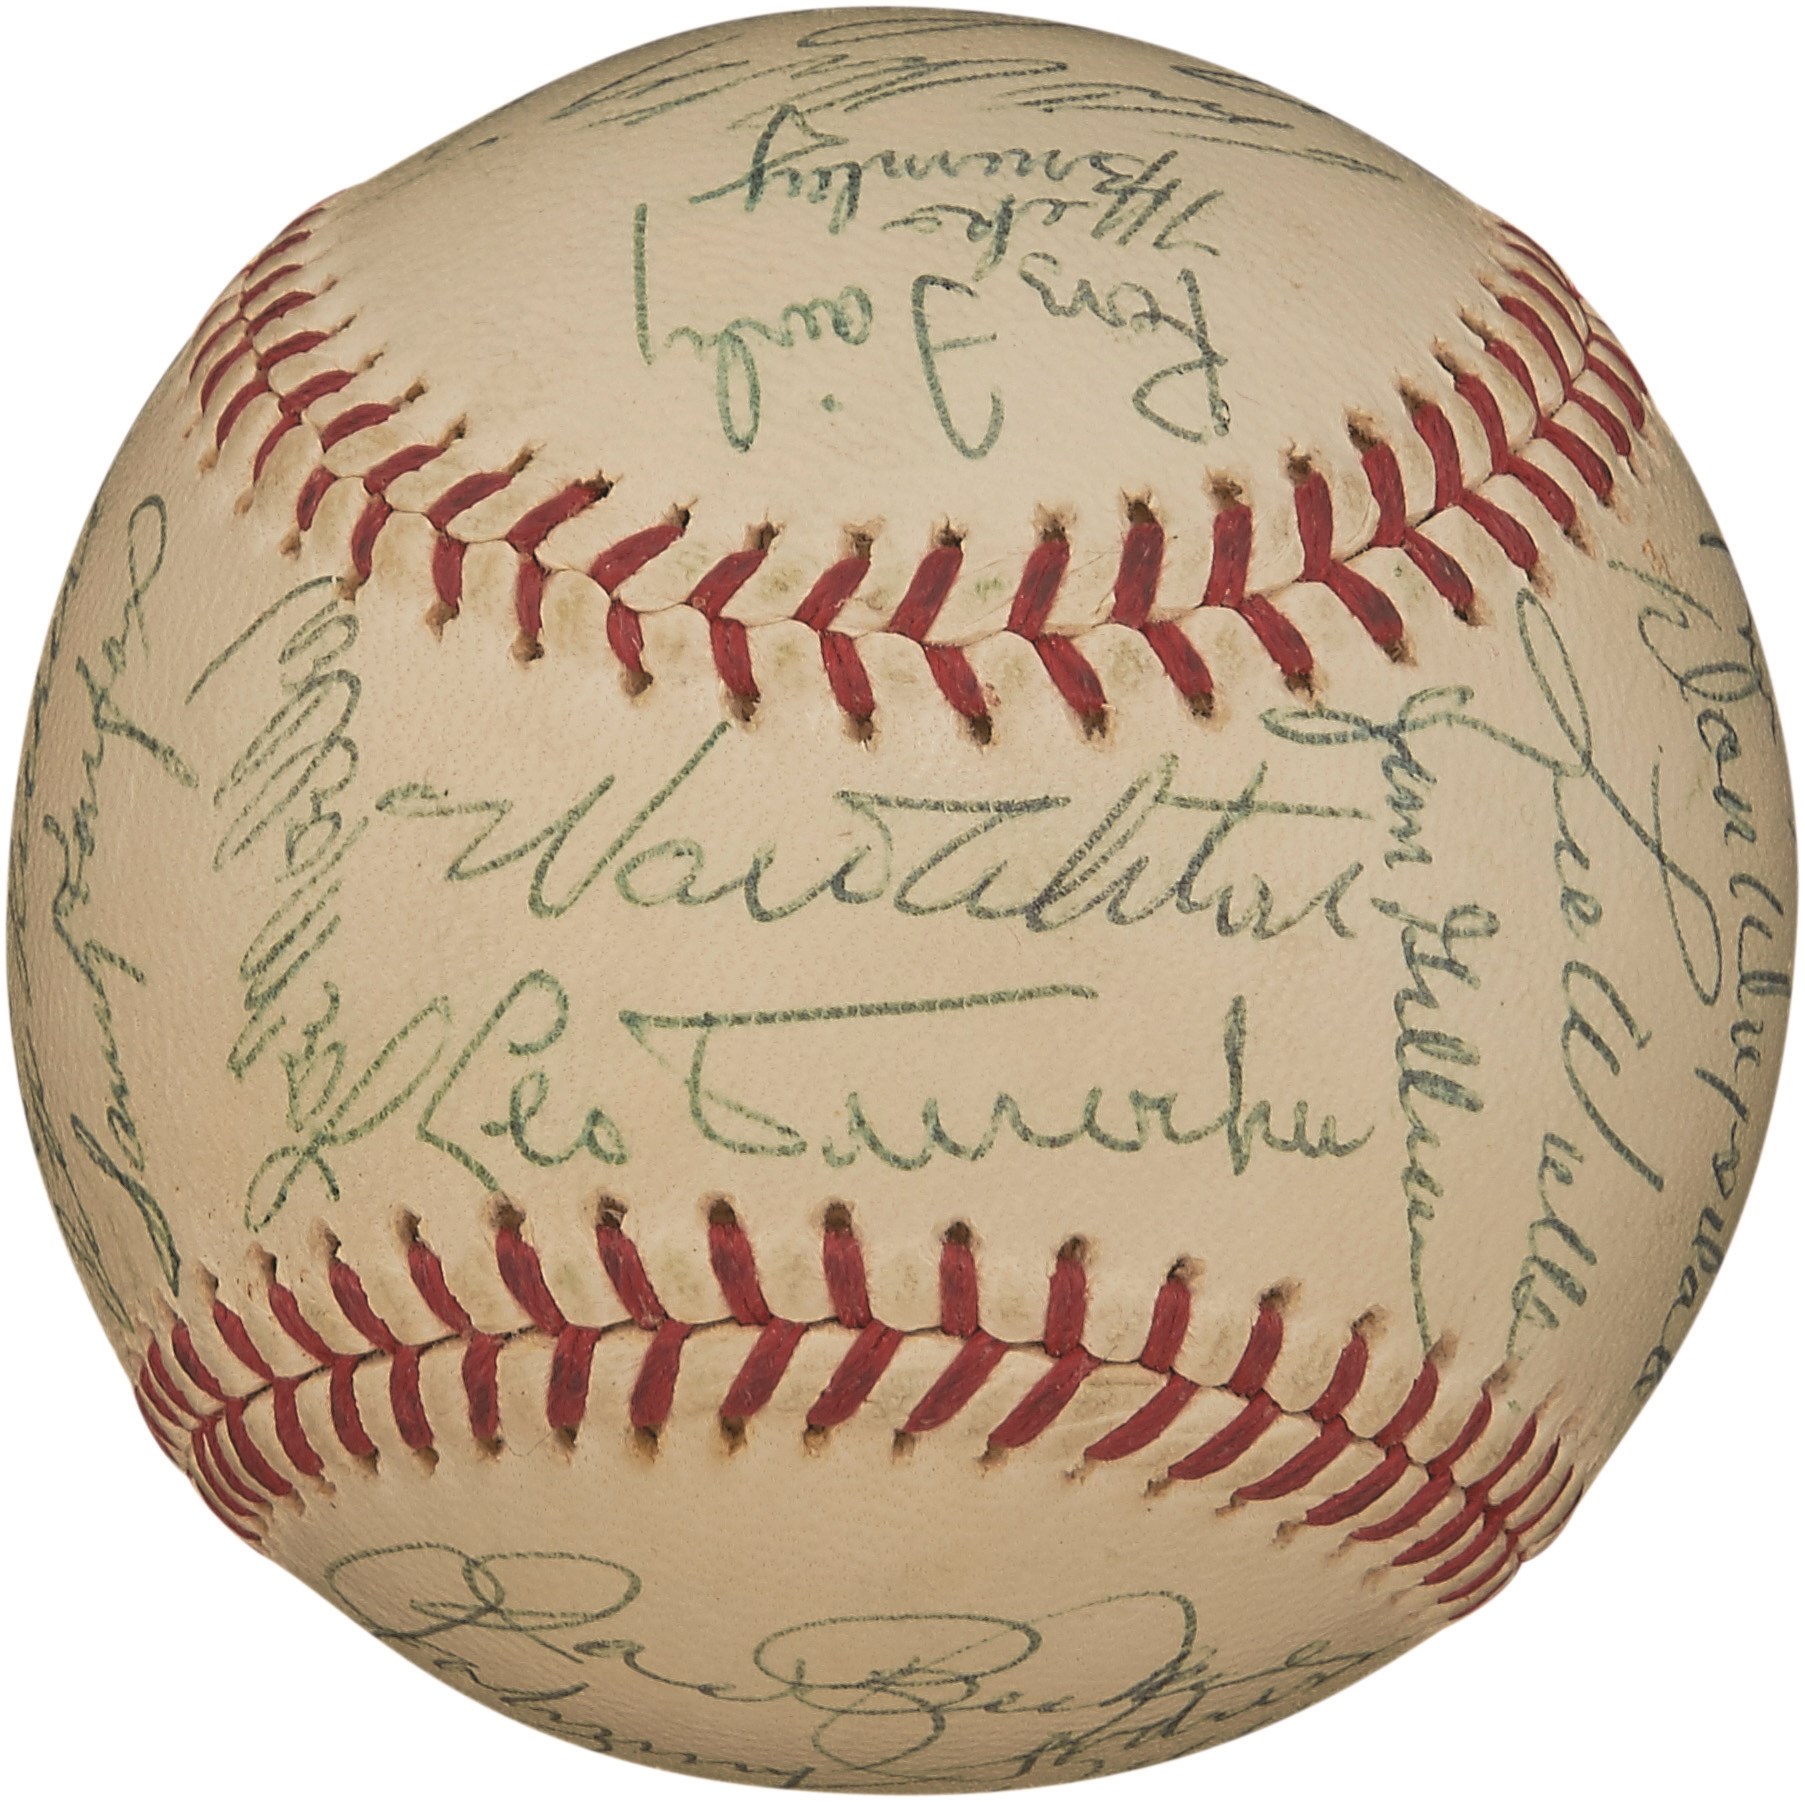 - 1963 World Champion Los Angeles Dodgers Team-Signed Baseball (PSA 9, HIGEST GRADED)